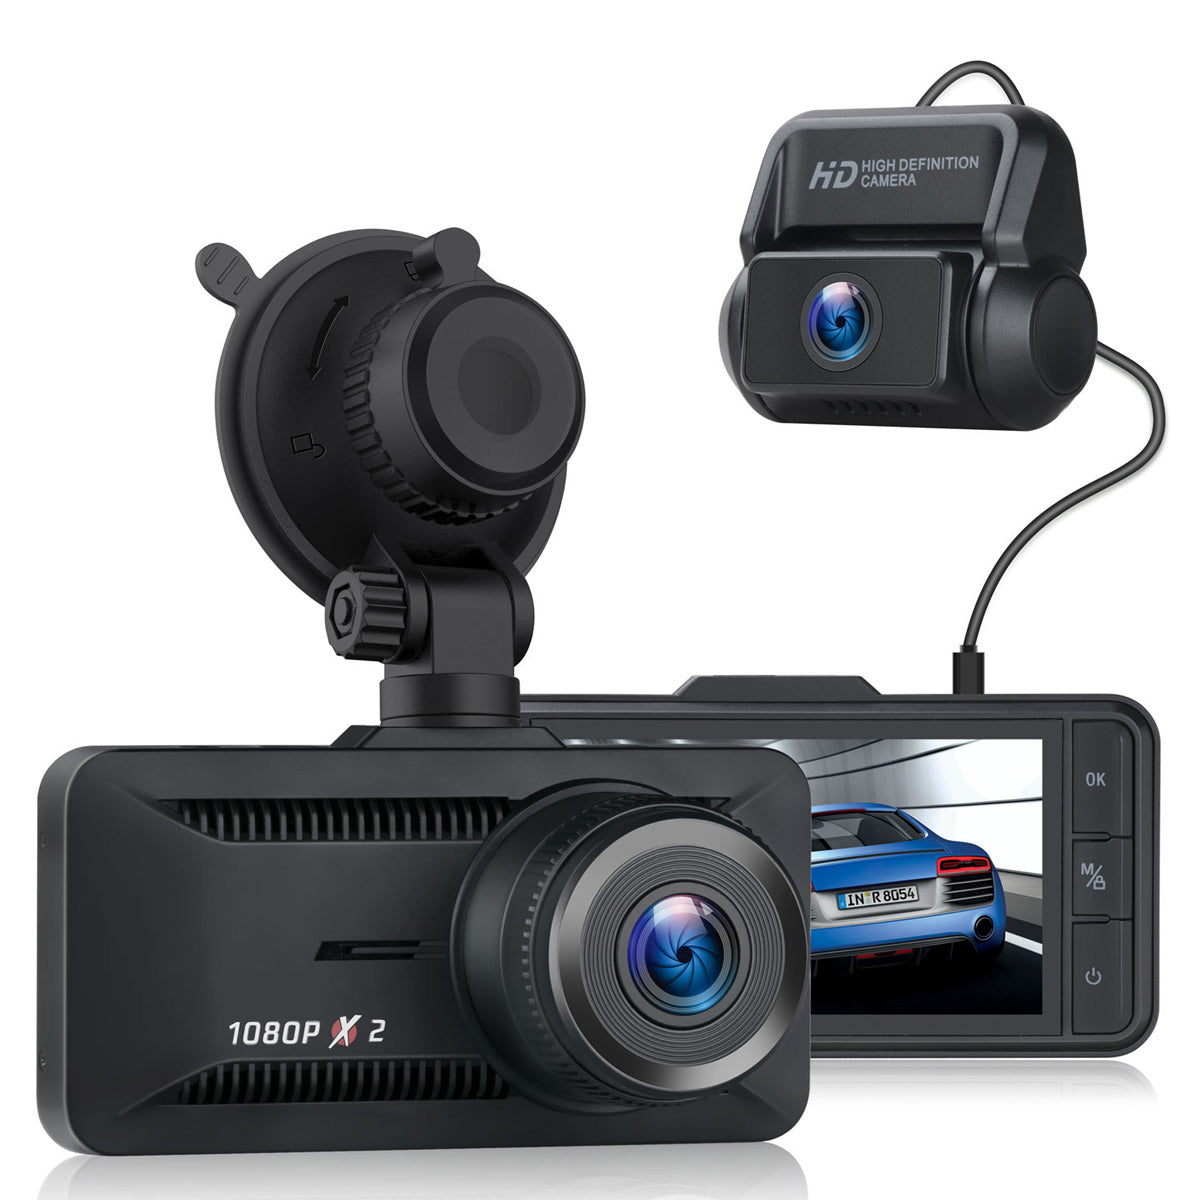 Buy Dash Cam Online, Toguard CE63 Dash Cam